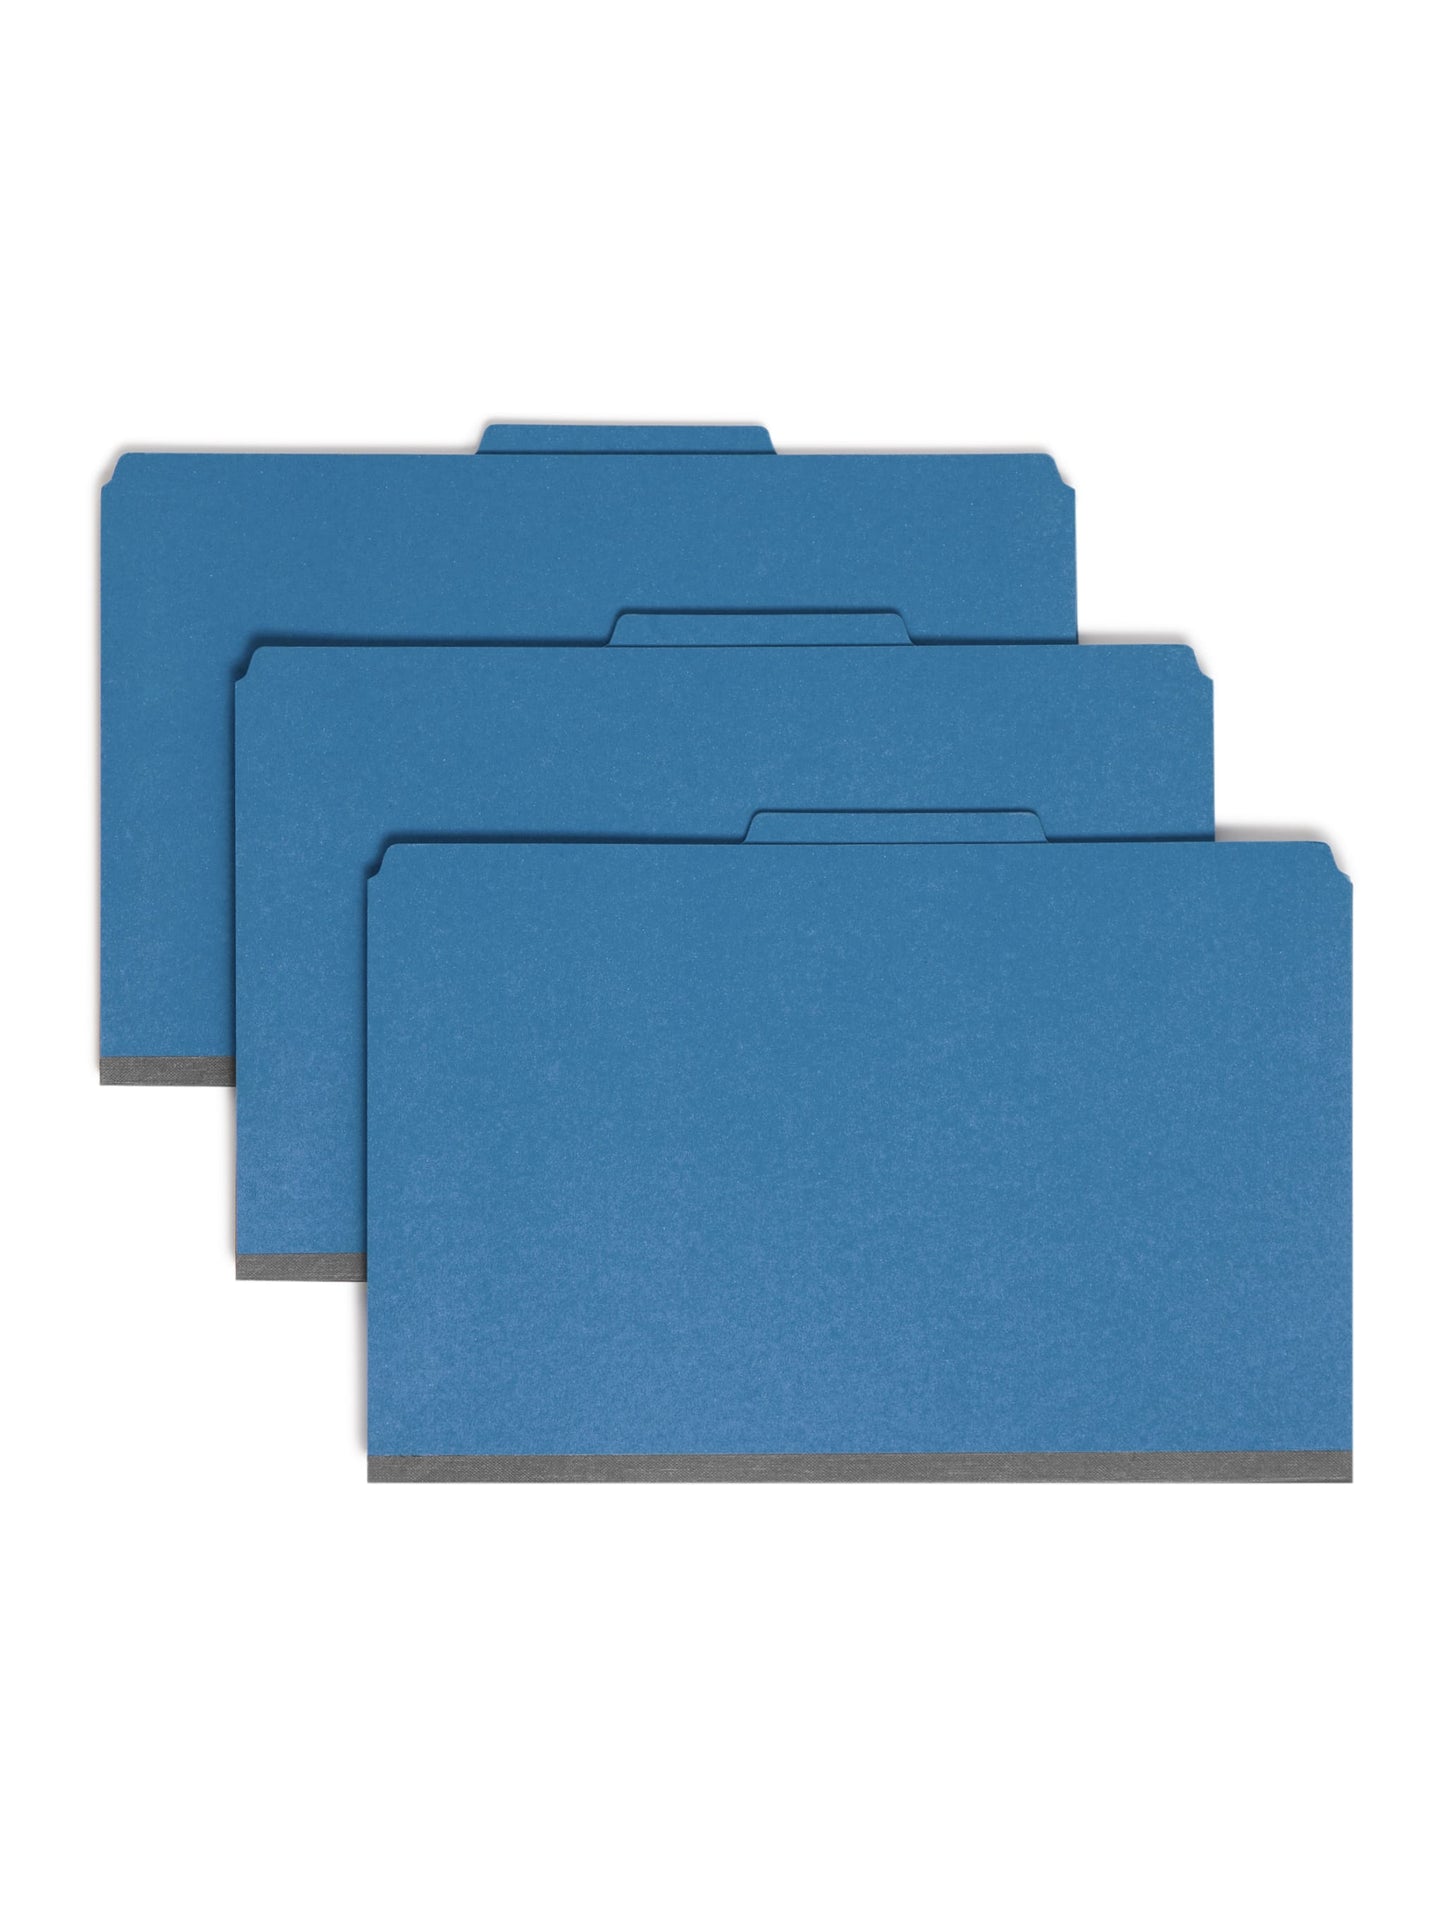 SafeSHIELD® Pressboard Classification File Folders, 2 Dividers, 2 inch Expansion, 2/5-Cut Tab, Dark Blue Color, Legal Size, 